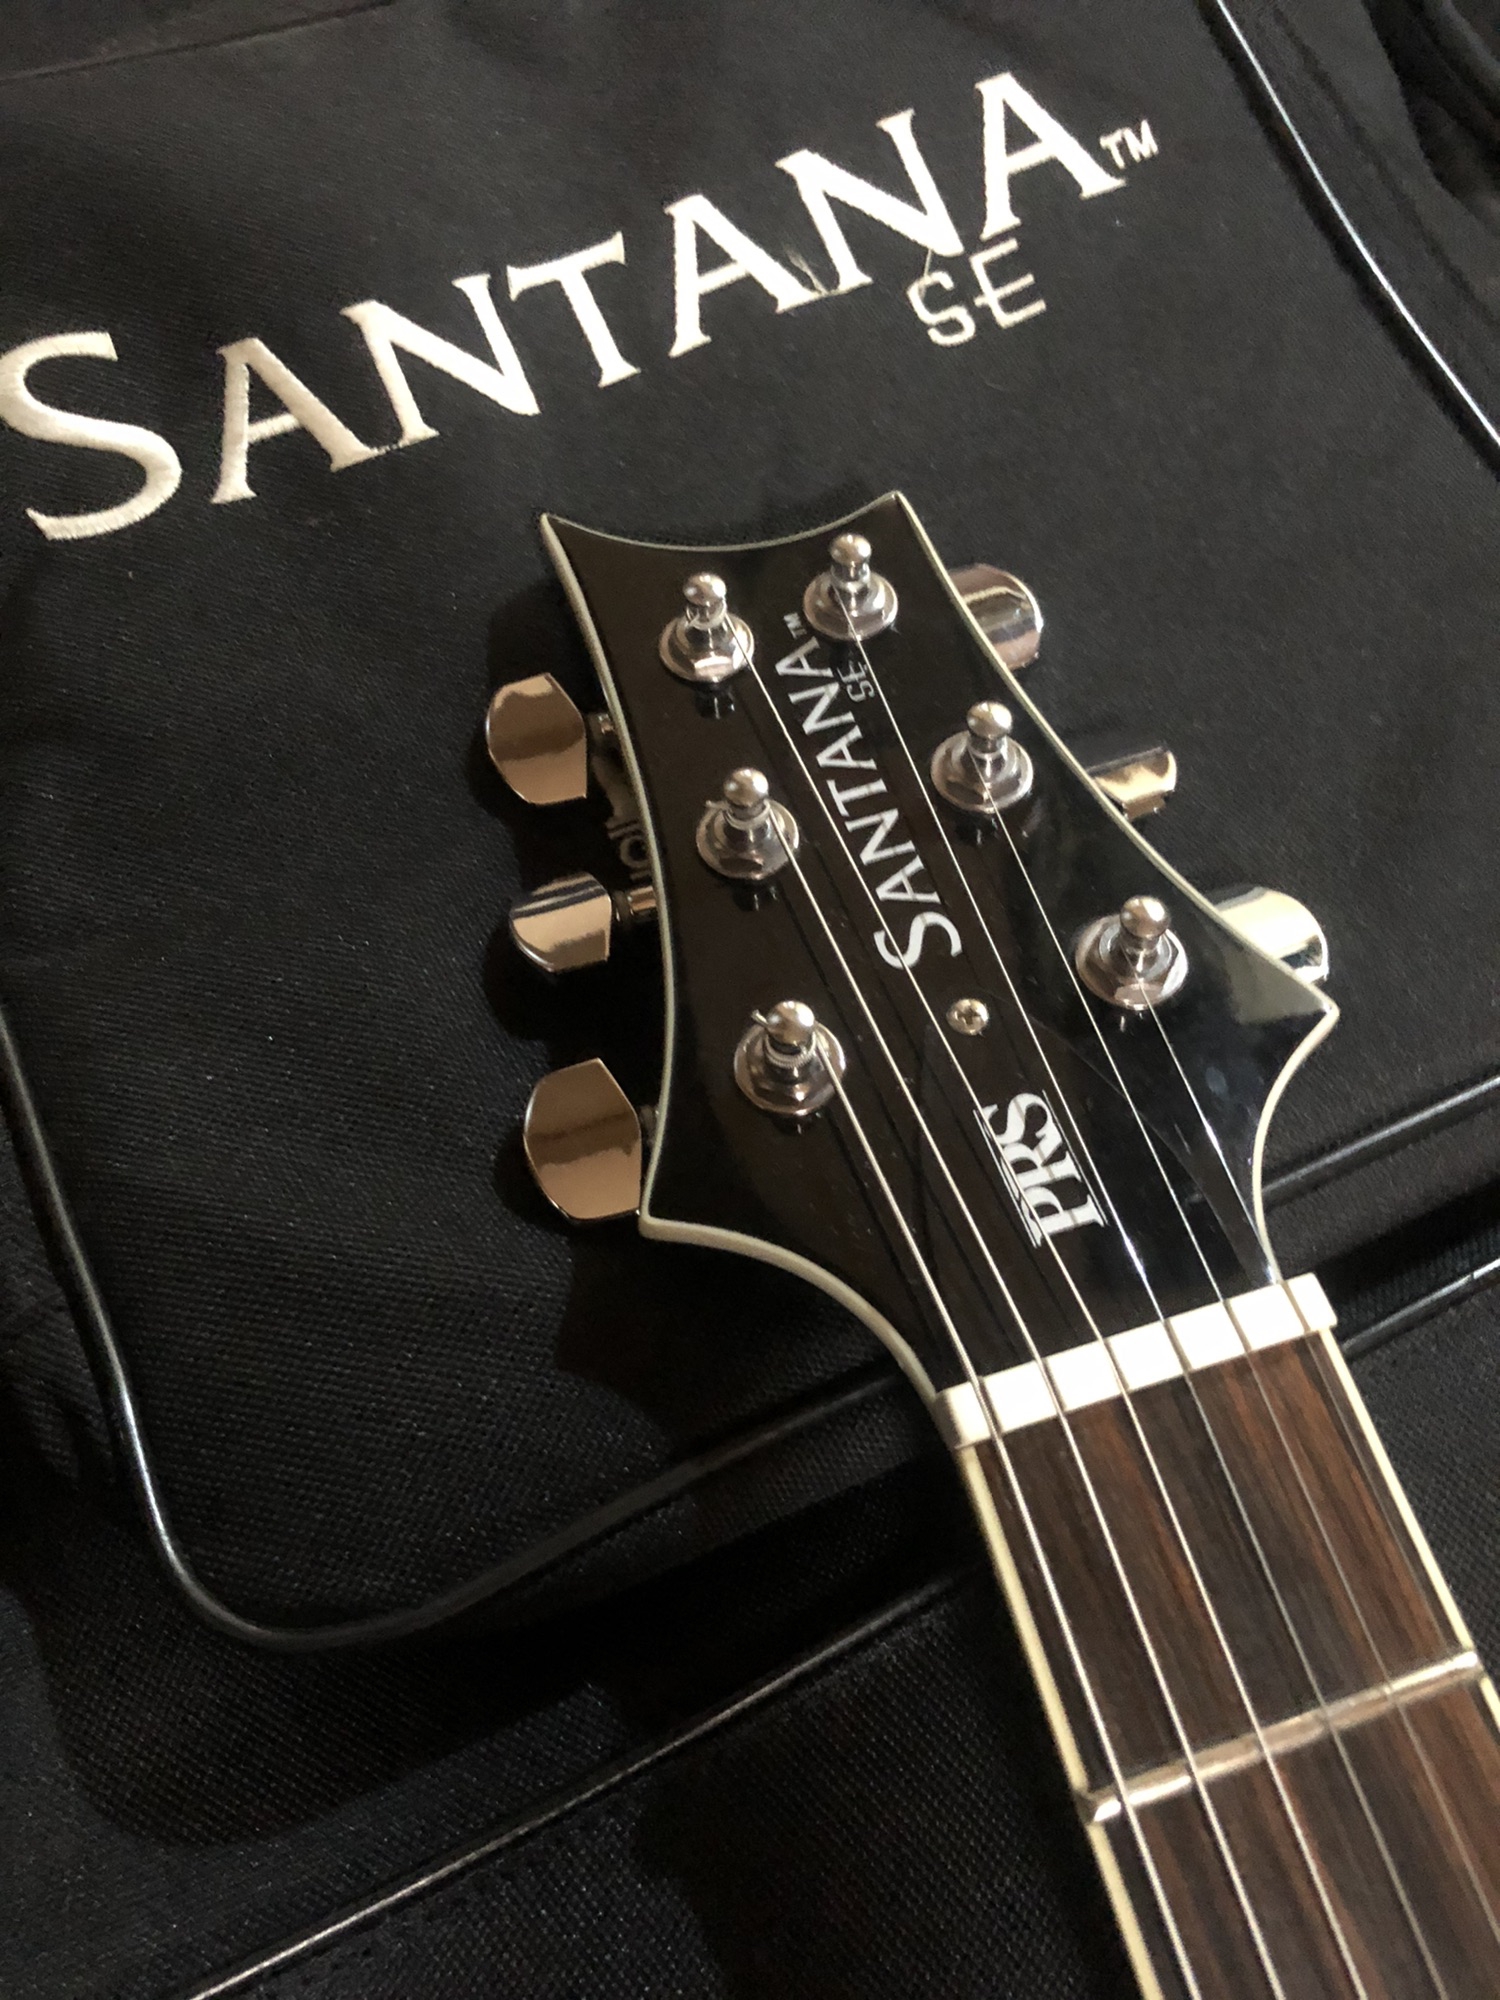 2002 PRS SANTANA SE-II / Royal Blue 〜 SOLD | High Hopes Guitar's